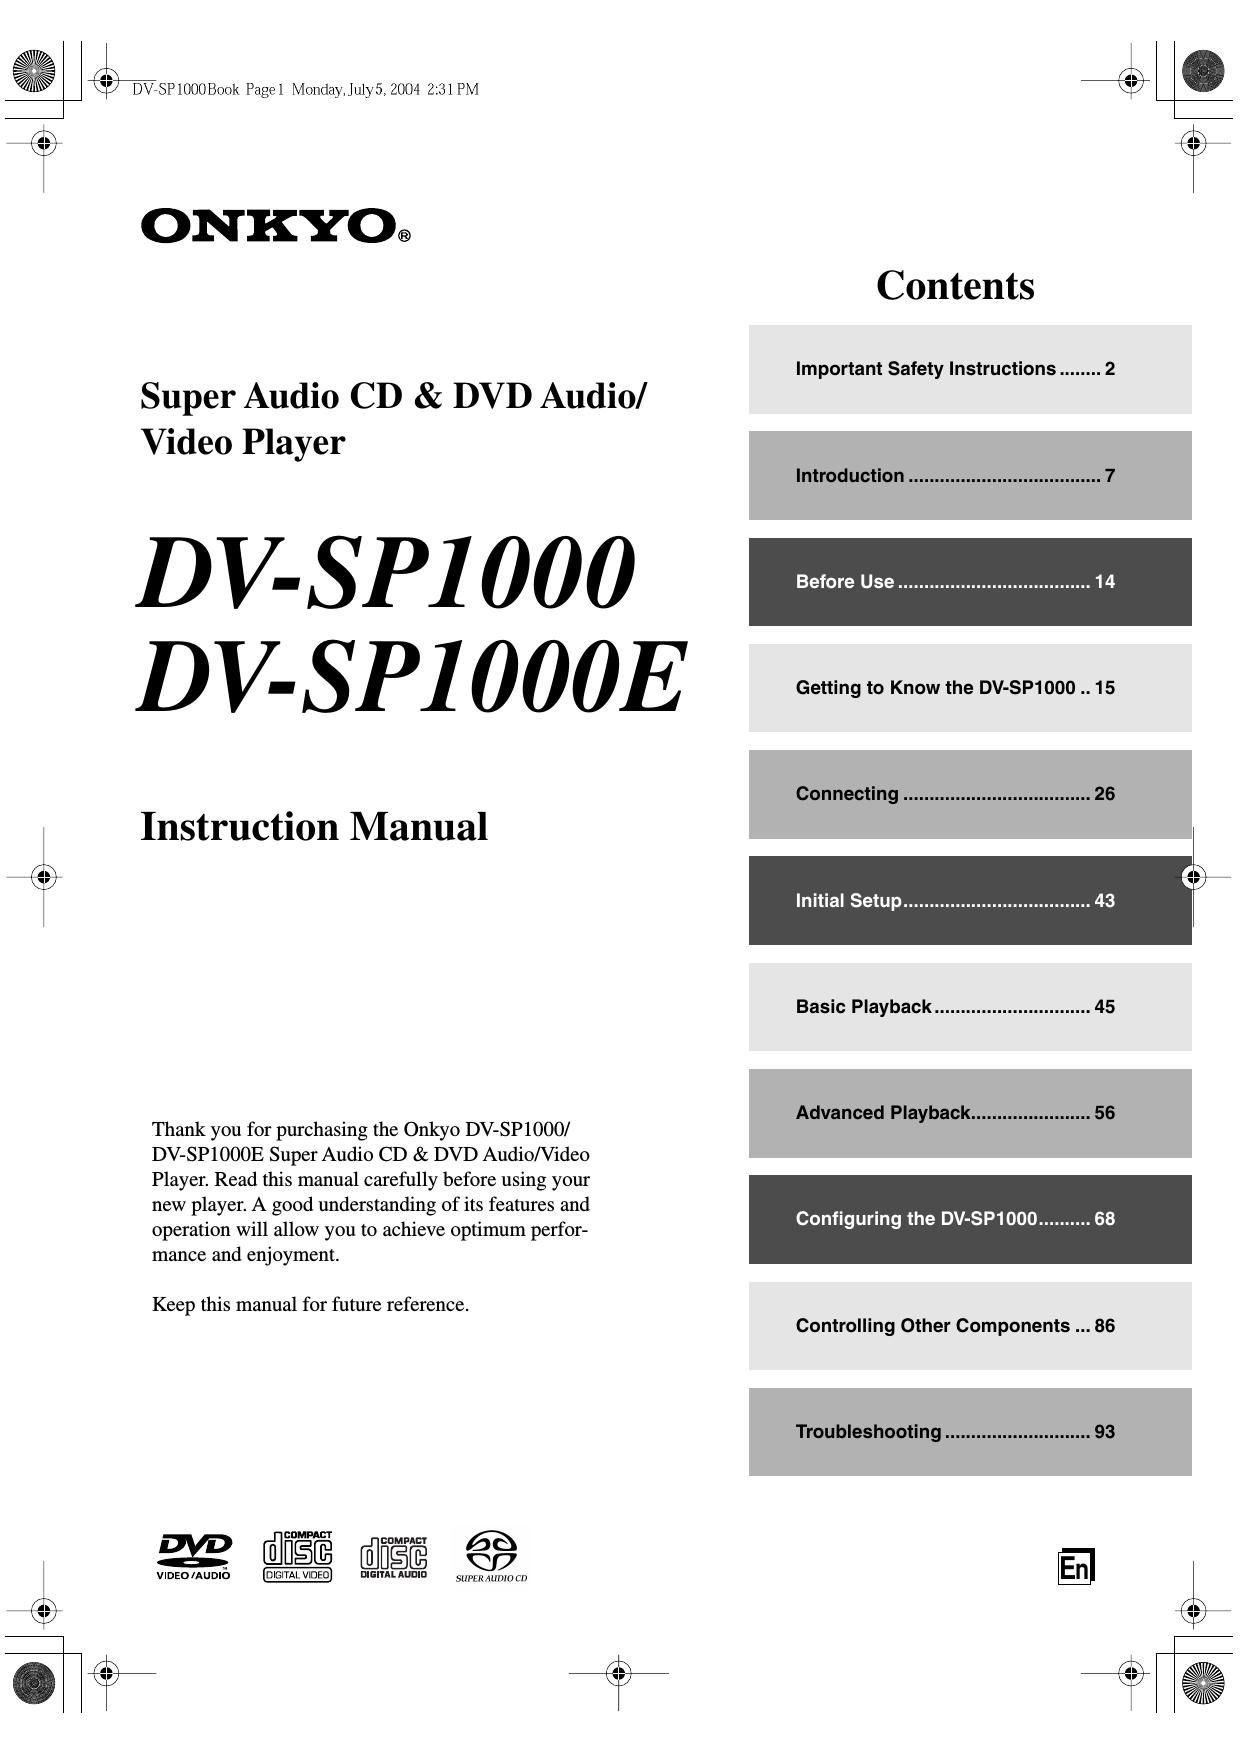 Onkyo DVSP 1000 Owners Manual